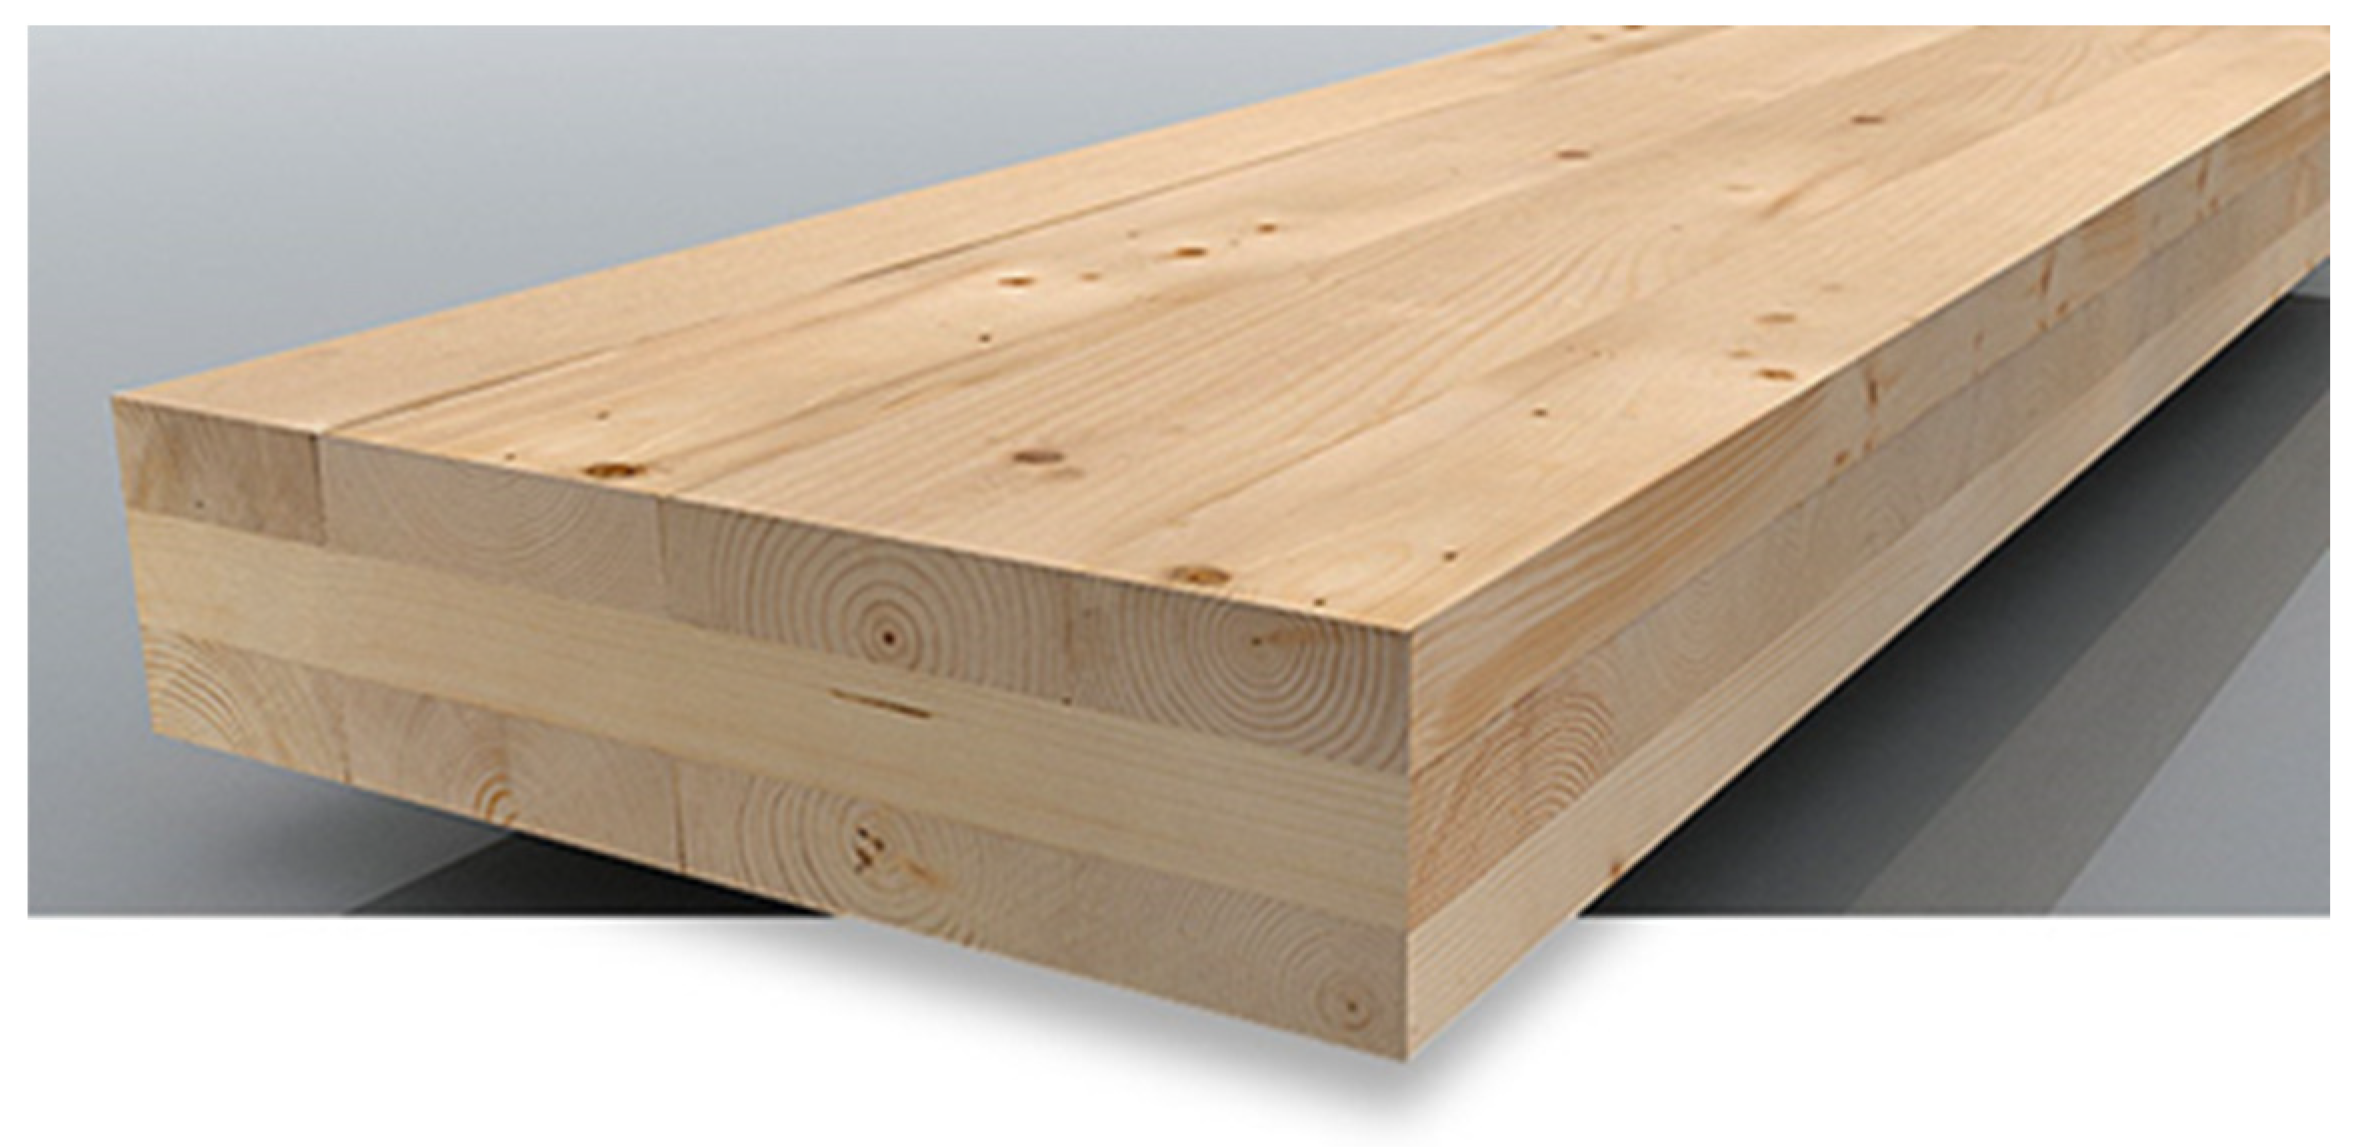 New wooden. Панели CLT ( Cross Laminated Timber ). Segezha Group CLT-панели. CLT 200 панель. Технология Cross Laminated Timber.